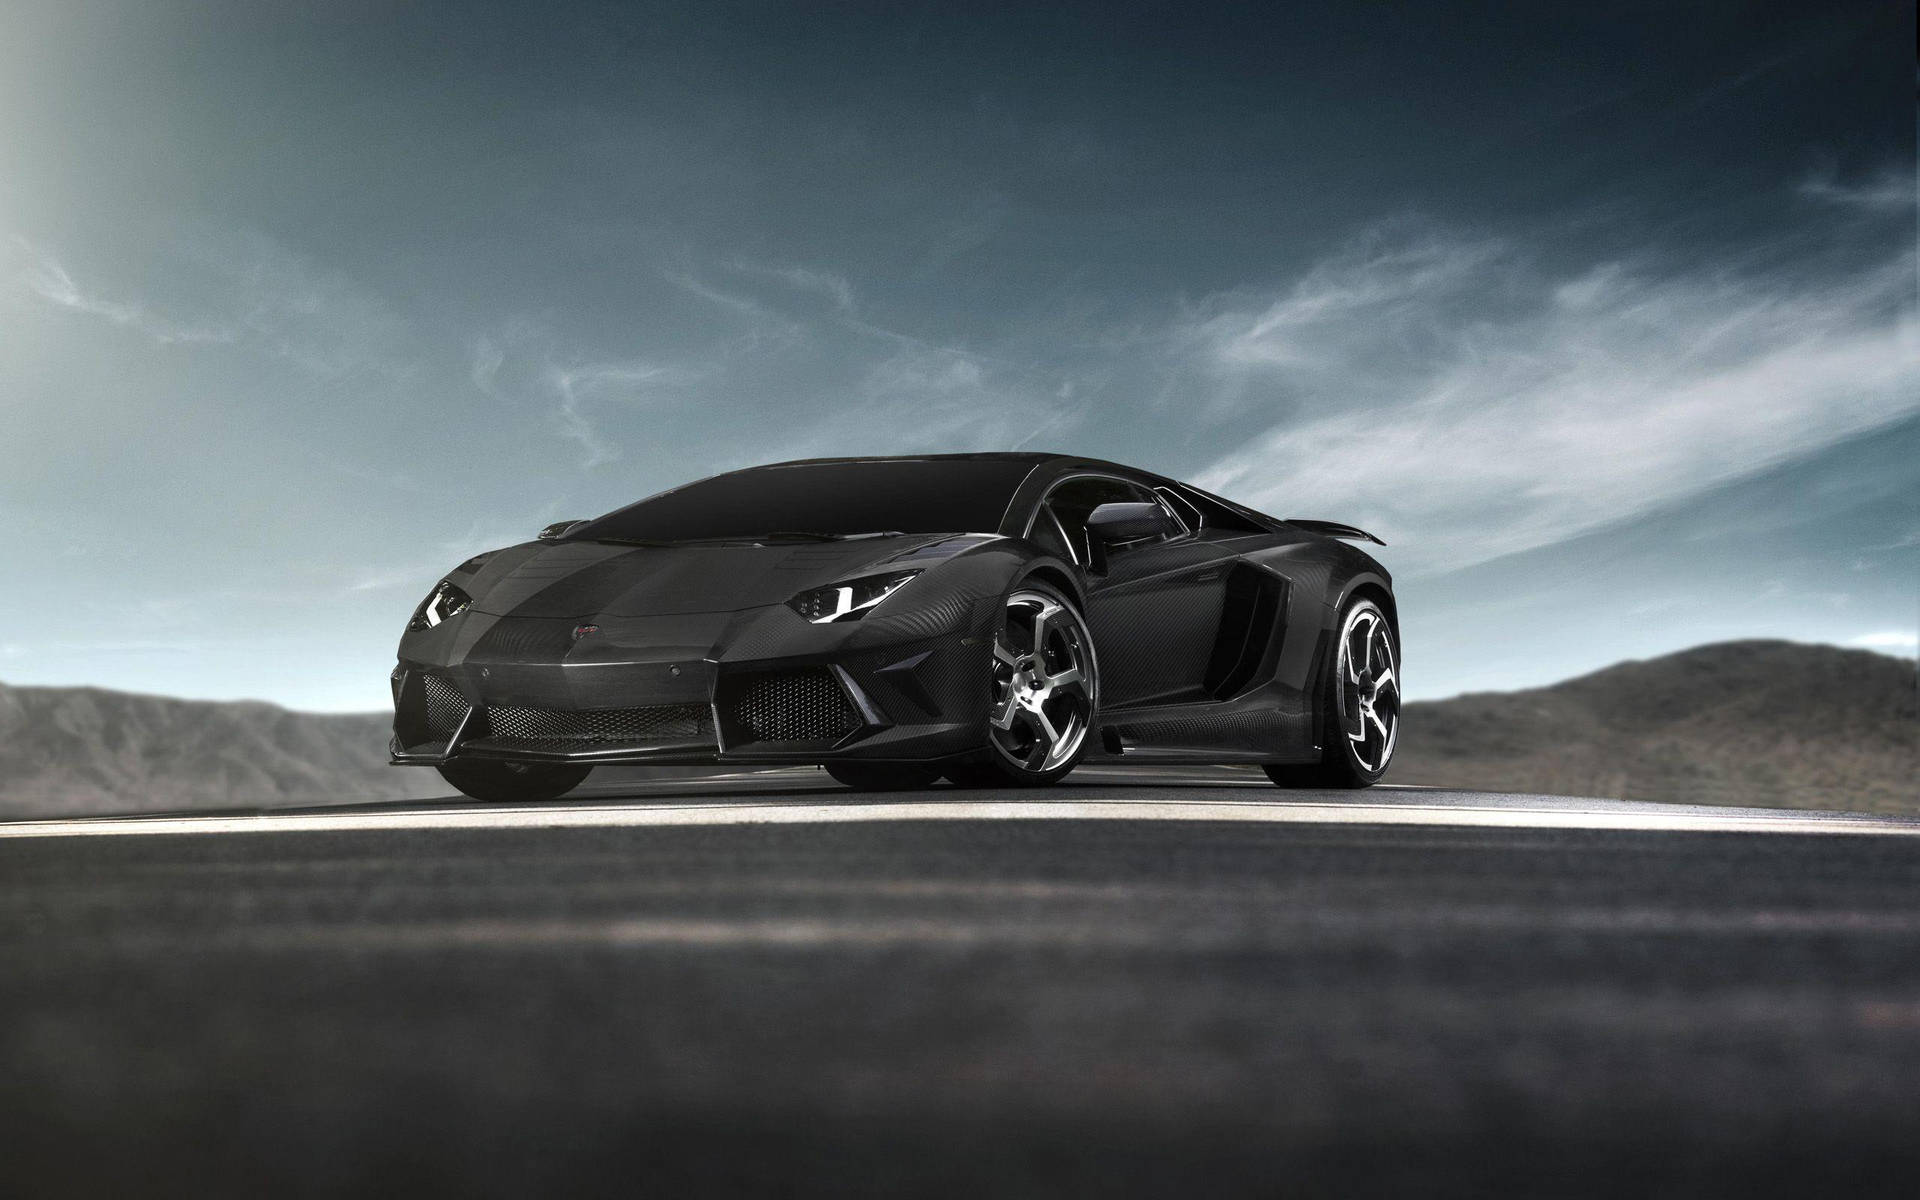 Lamborghini 2560X1600 Wallpaper and Background Image